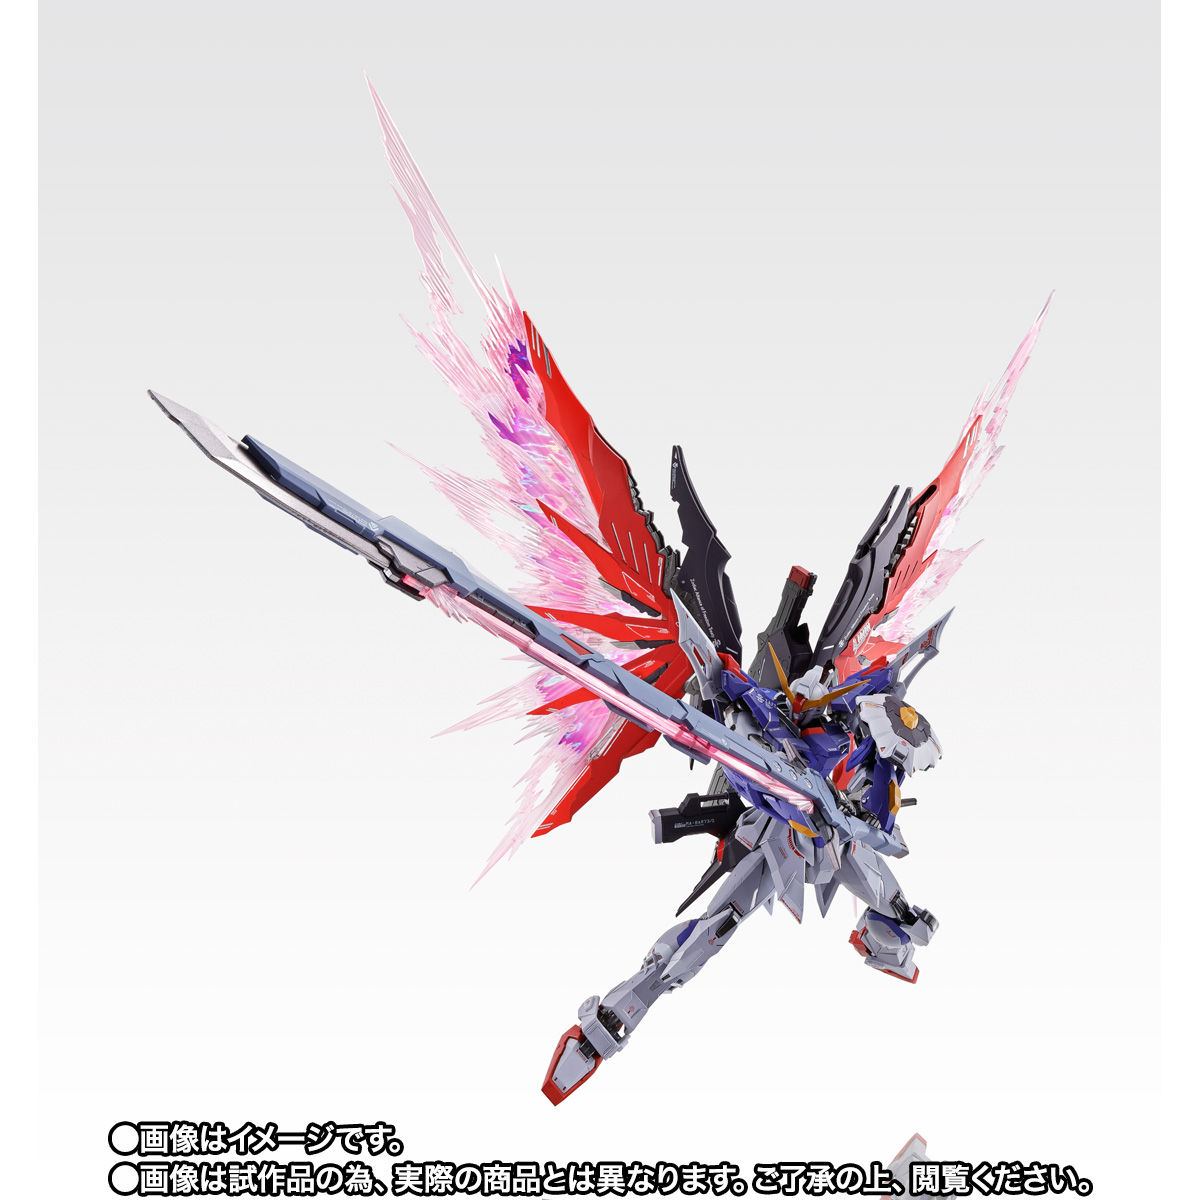 Metal Build Mobile Suit Gundam Seed Destiny Destiny Gundam Soul Red Ver